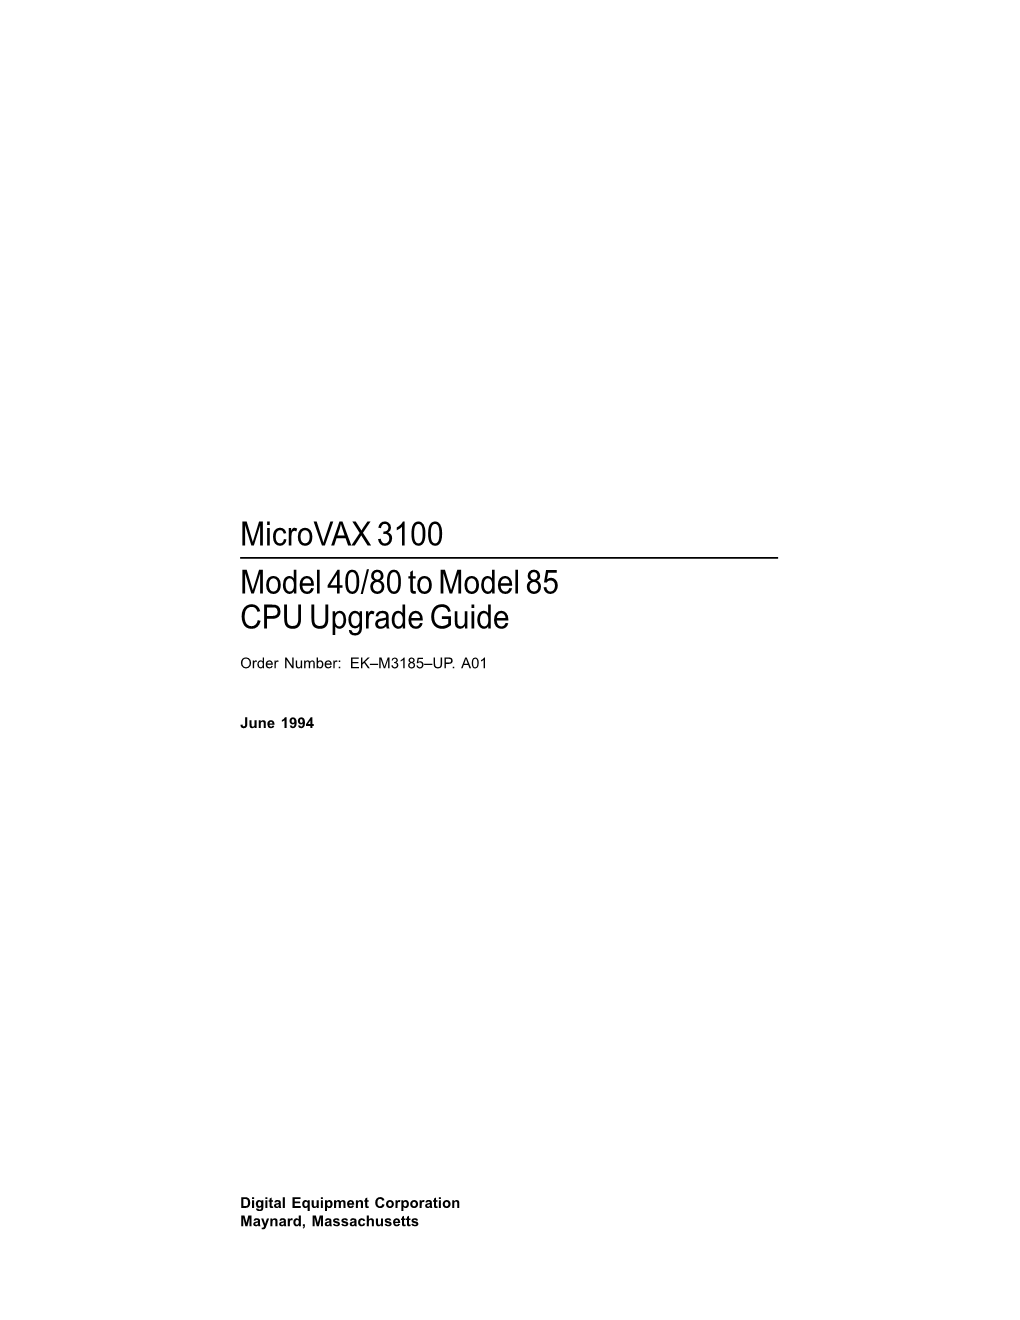 Microvax 3100 Model 40/80 to Model 85 CPU Upgrade Guide